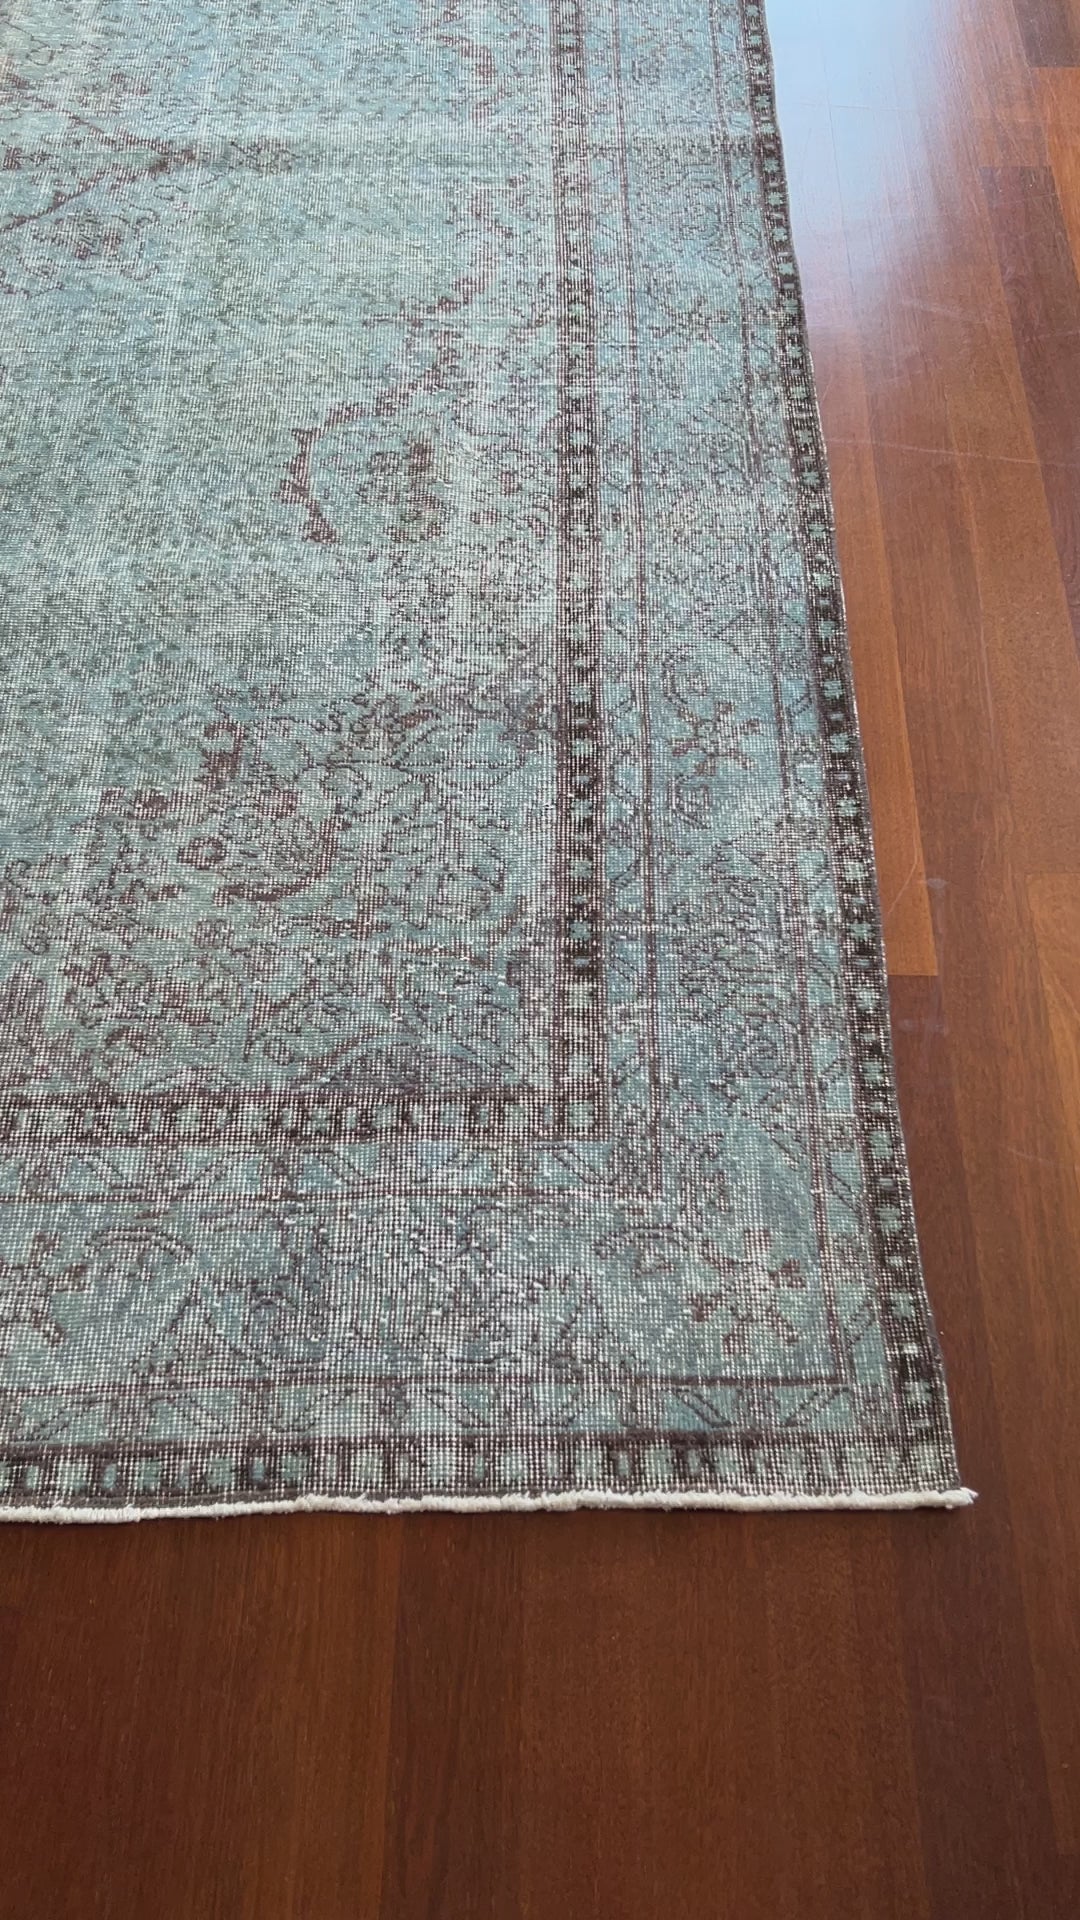 indigo blue vintage turkish rug shop san francisco bay area anatolian vintage rug palo alto oriental rug berkeley distressed overdyed rug shop online california toronto canada